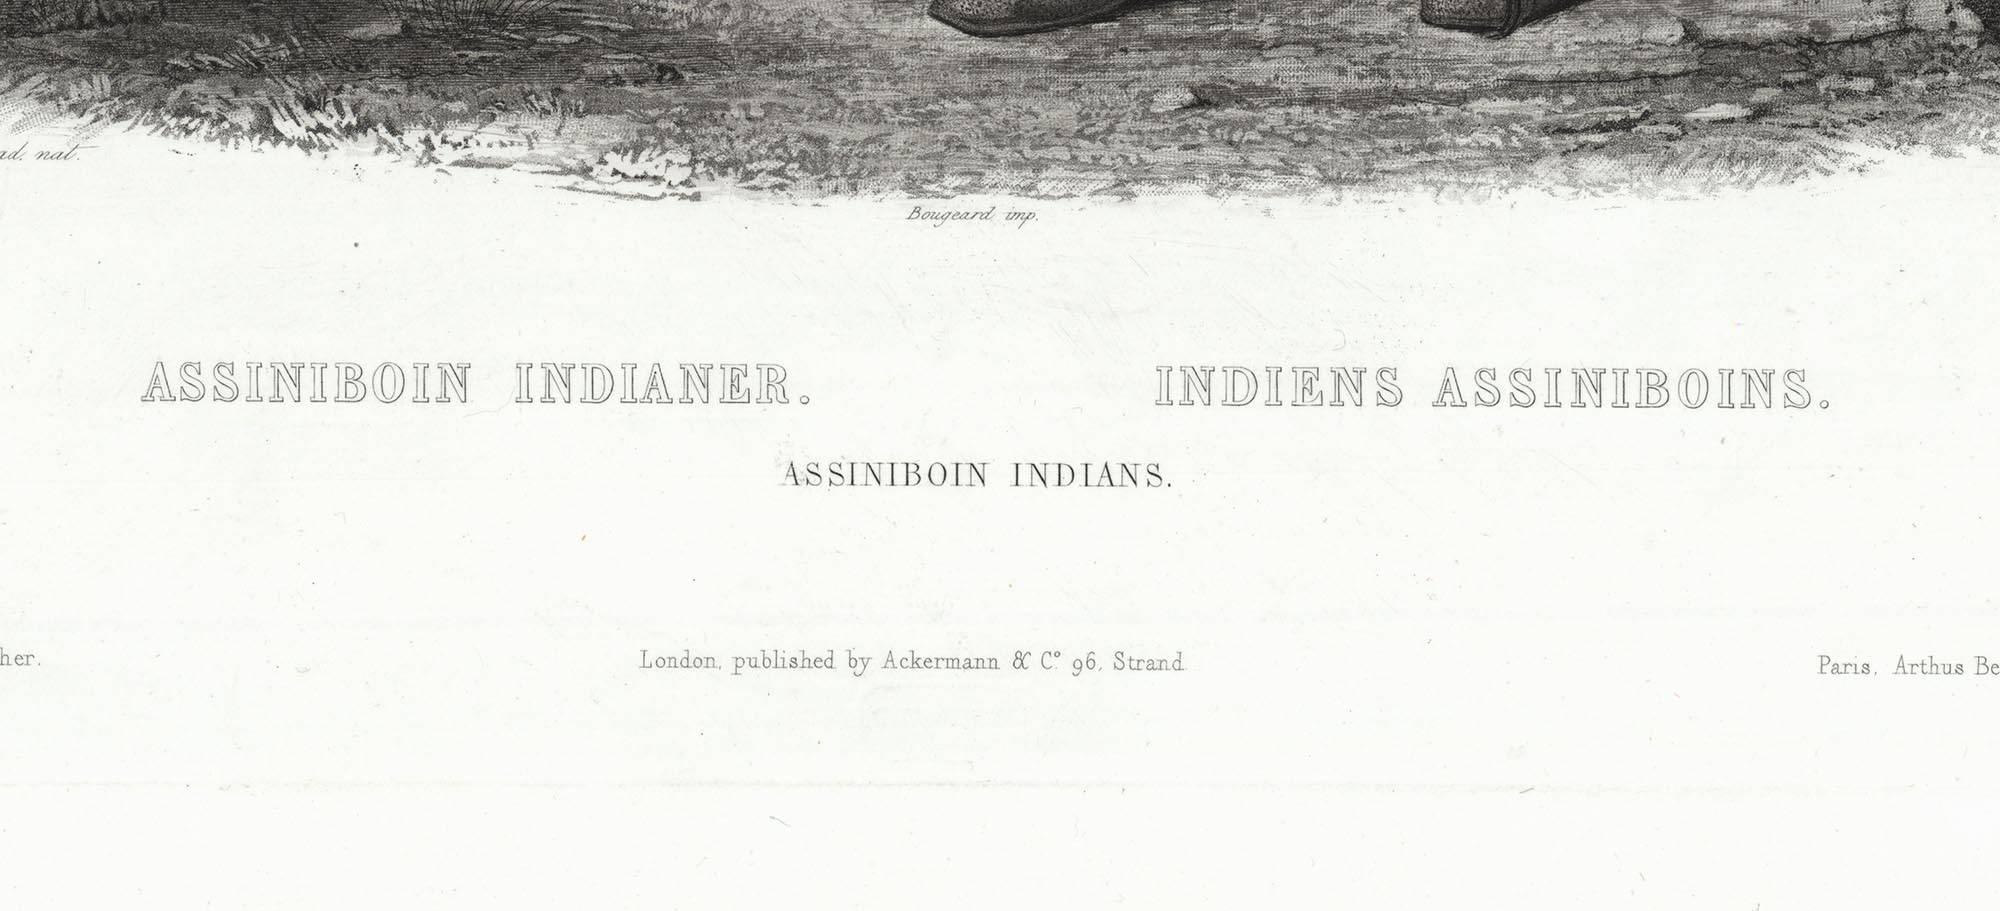 Assiniboin Indians. Tab. 32. - Print by Karl Bodmer